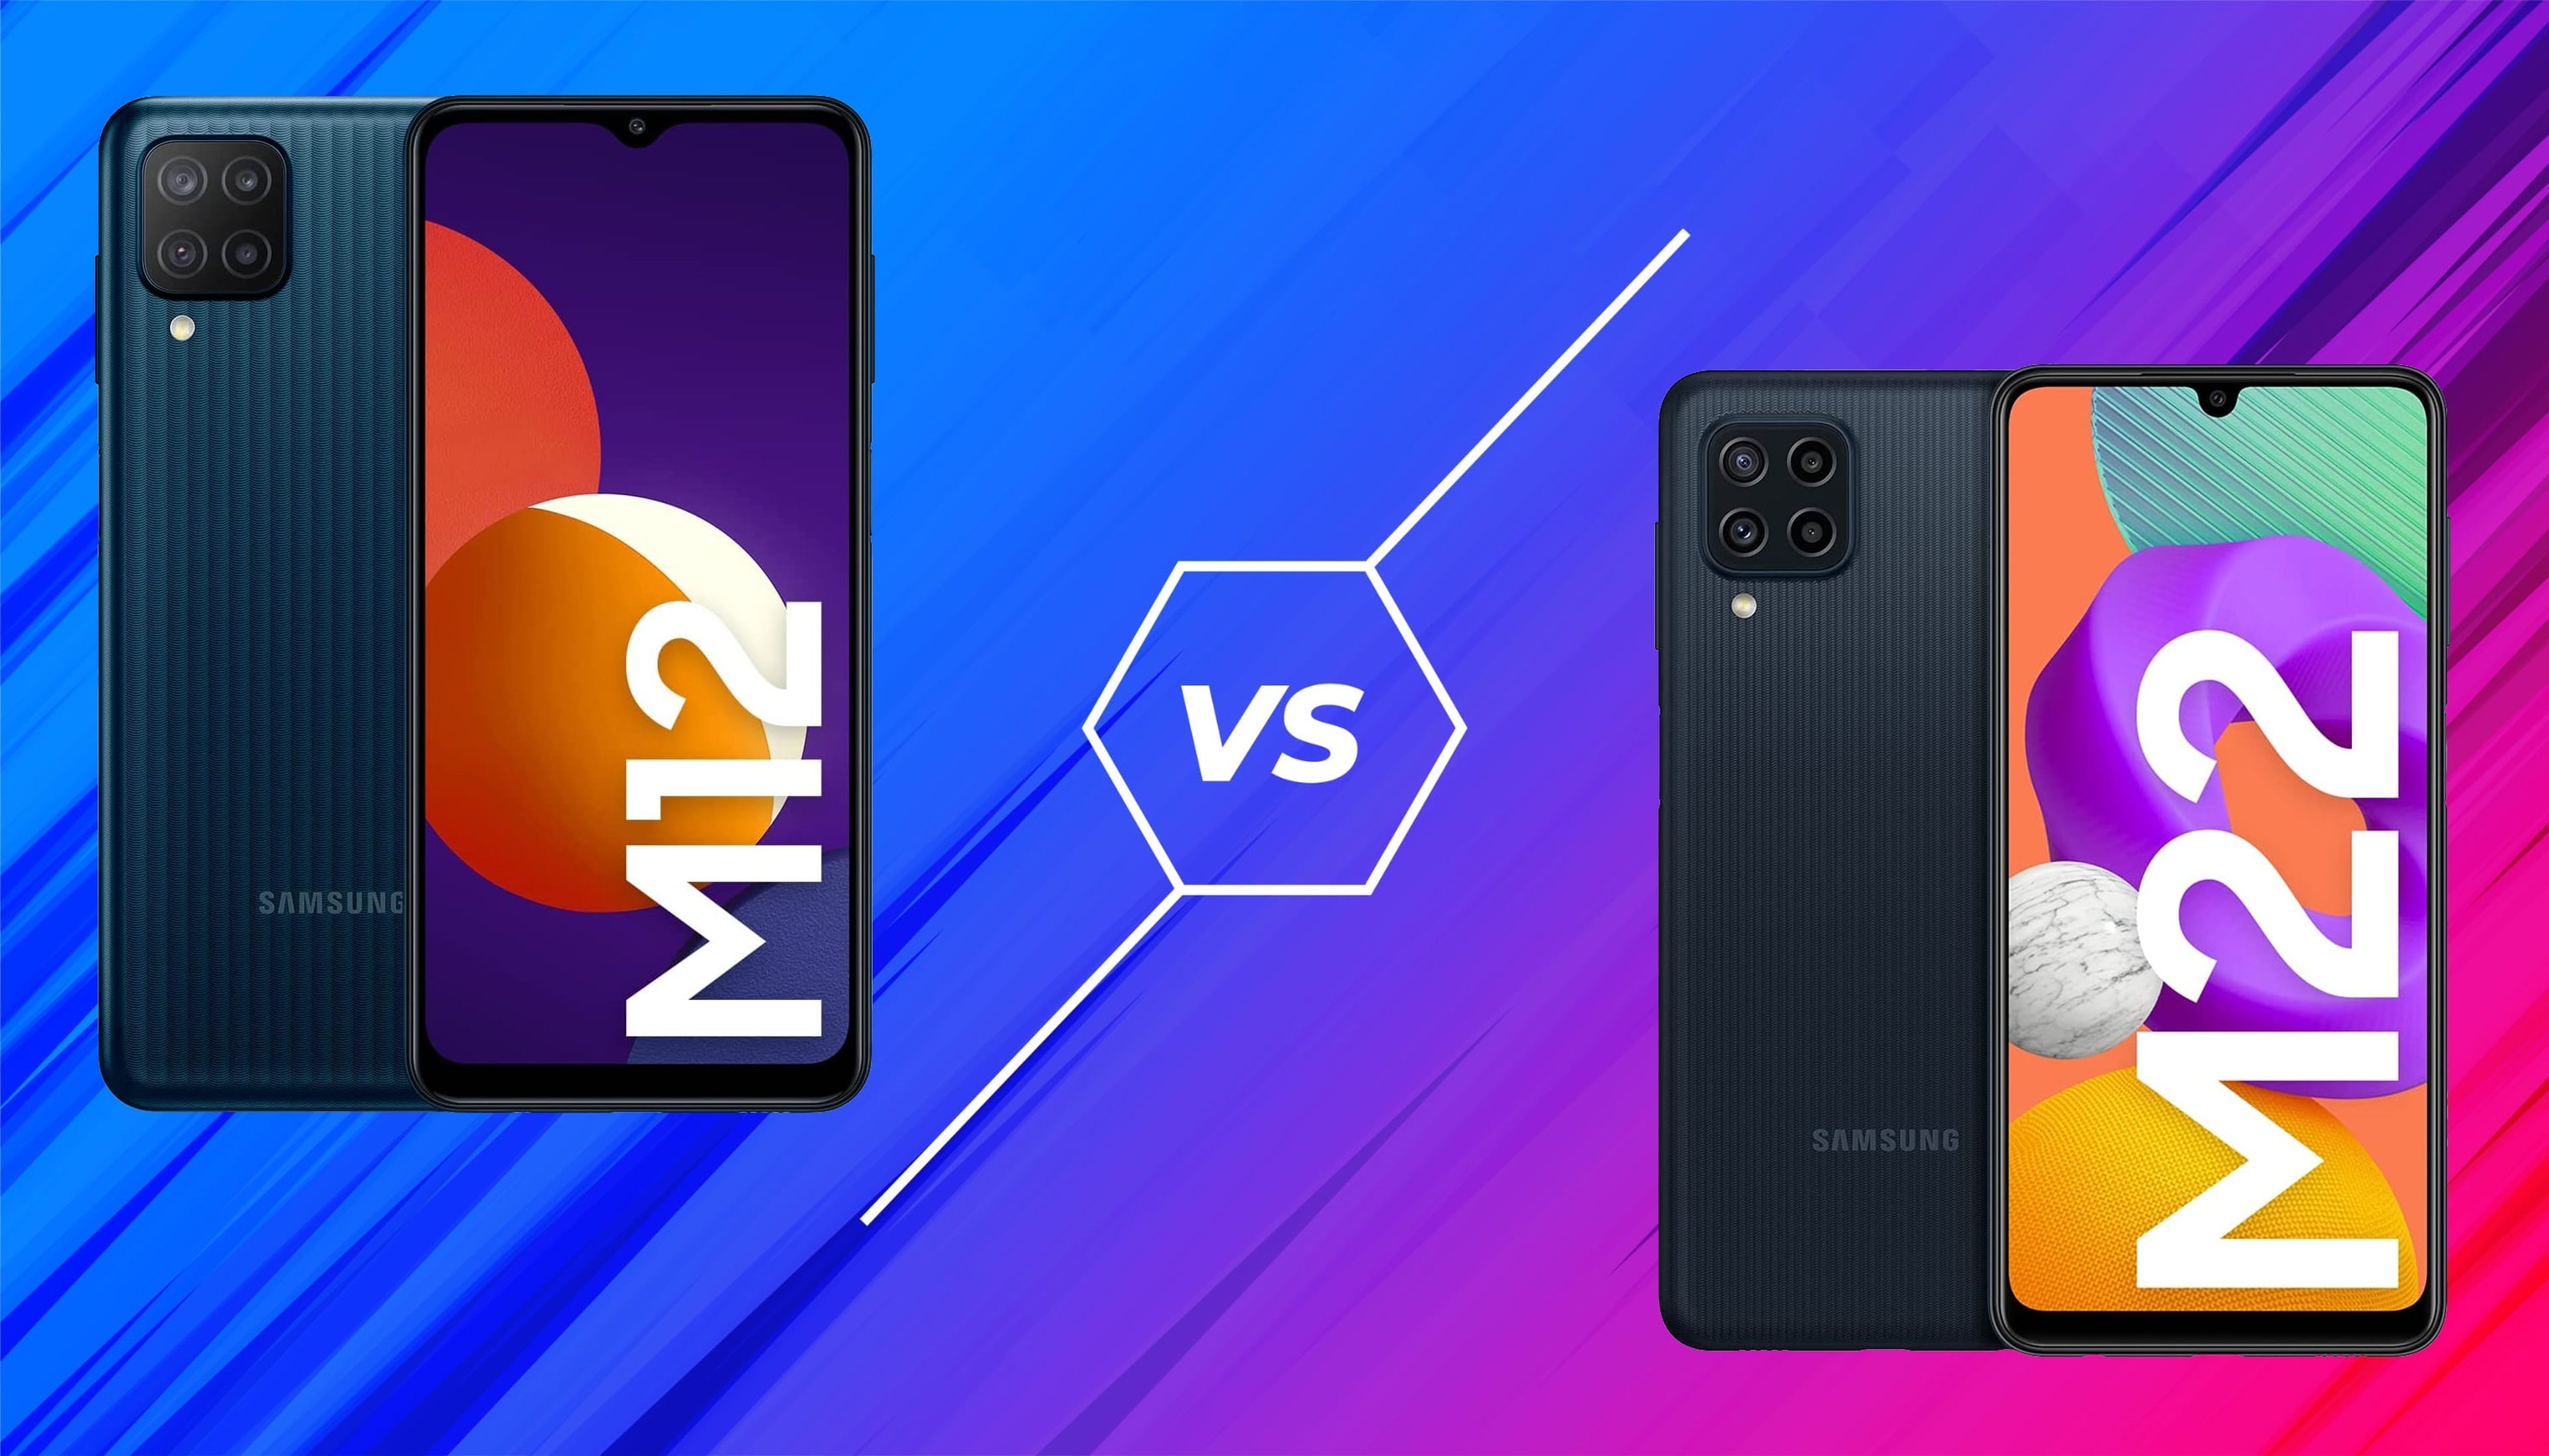 Samsung Galaxy M12 vs Galaxy M22